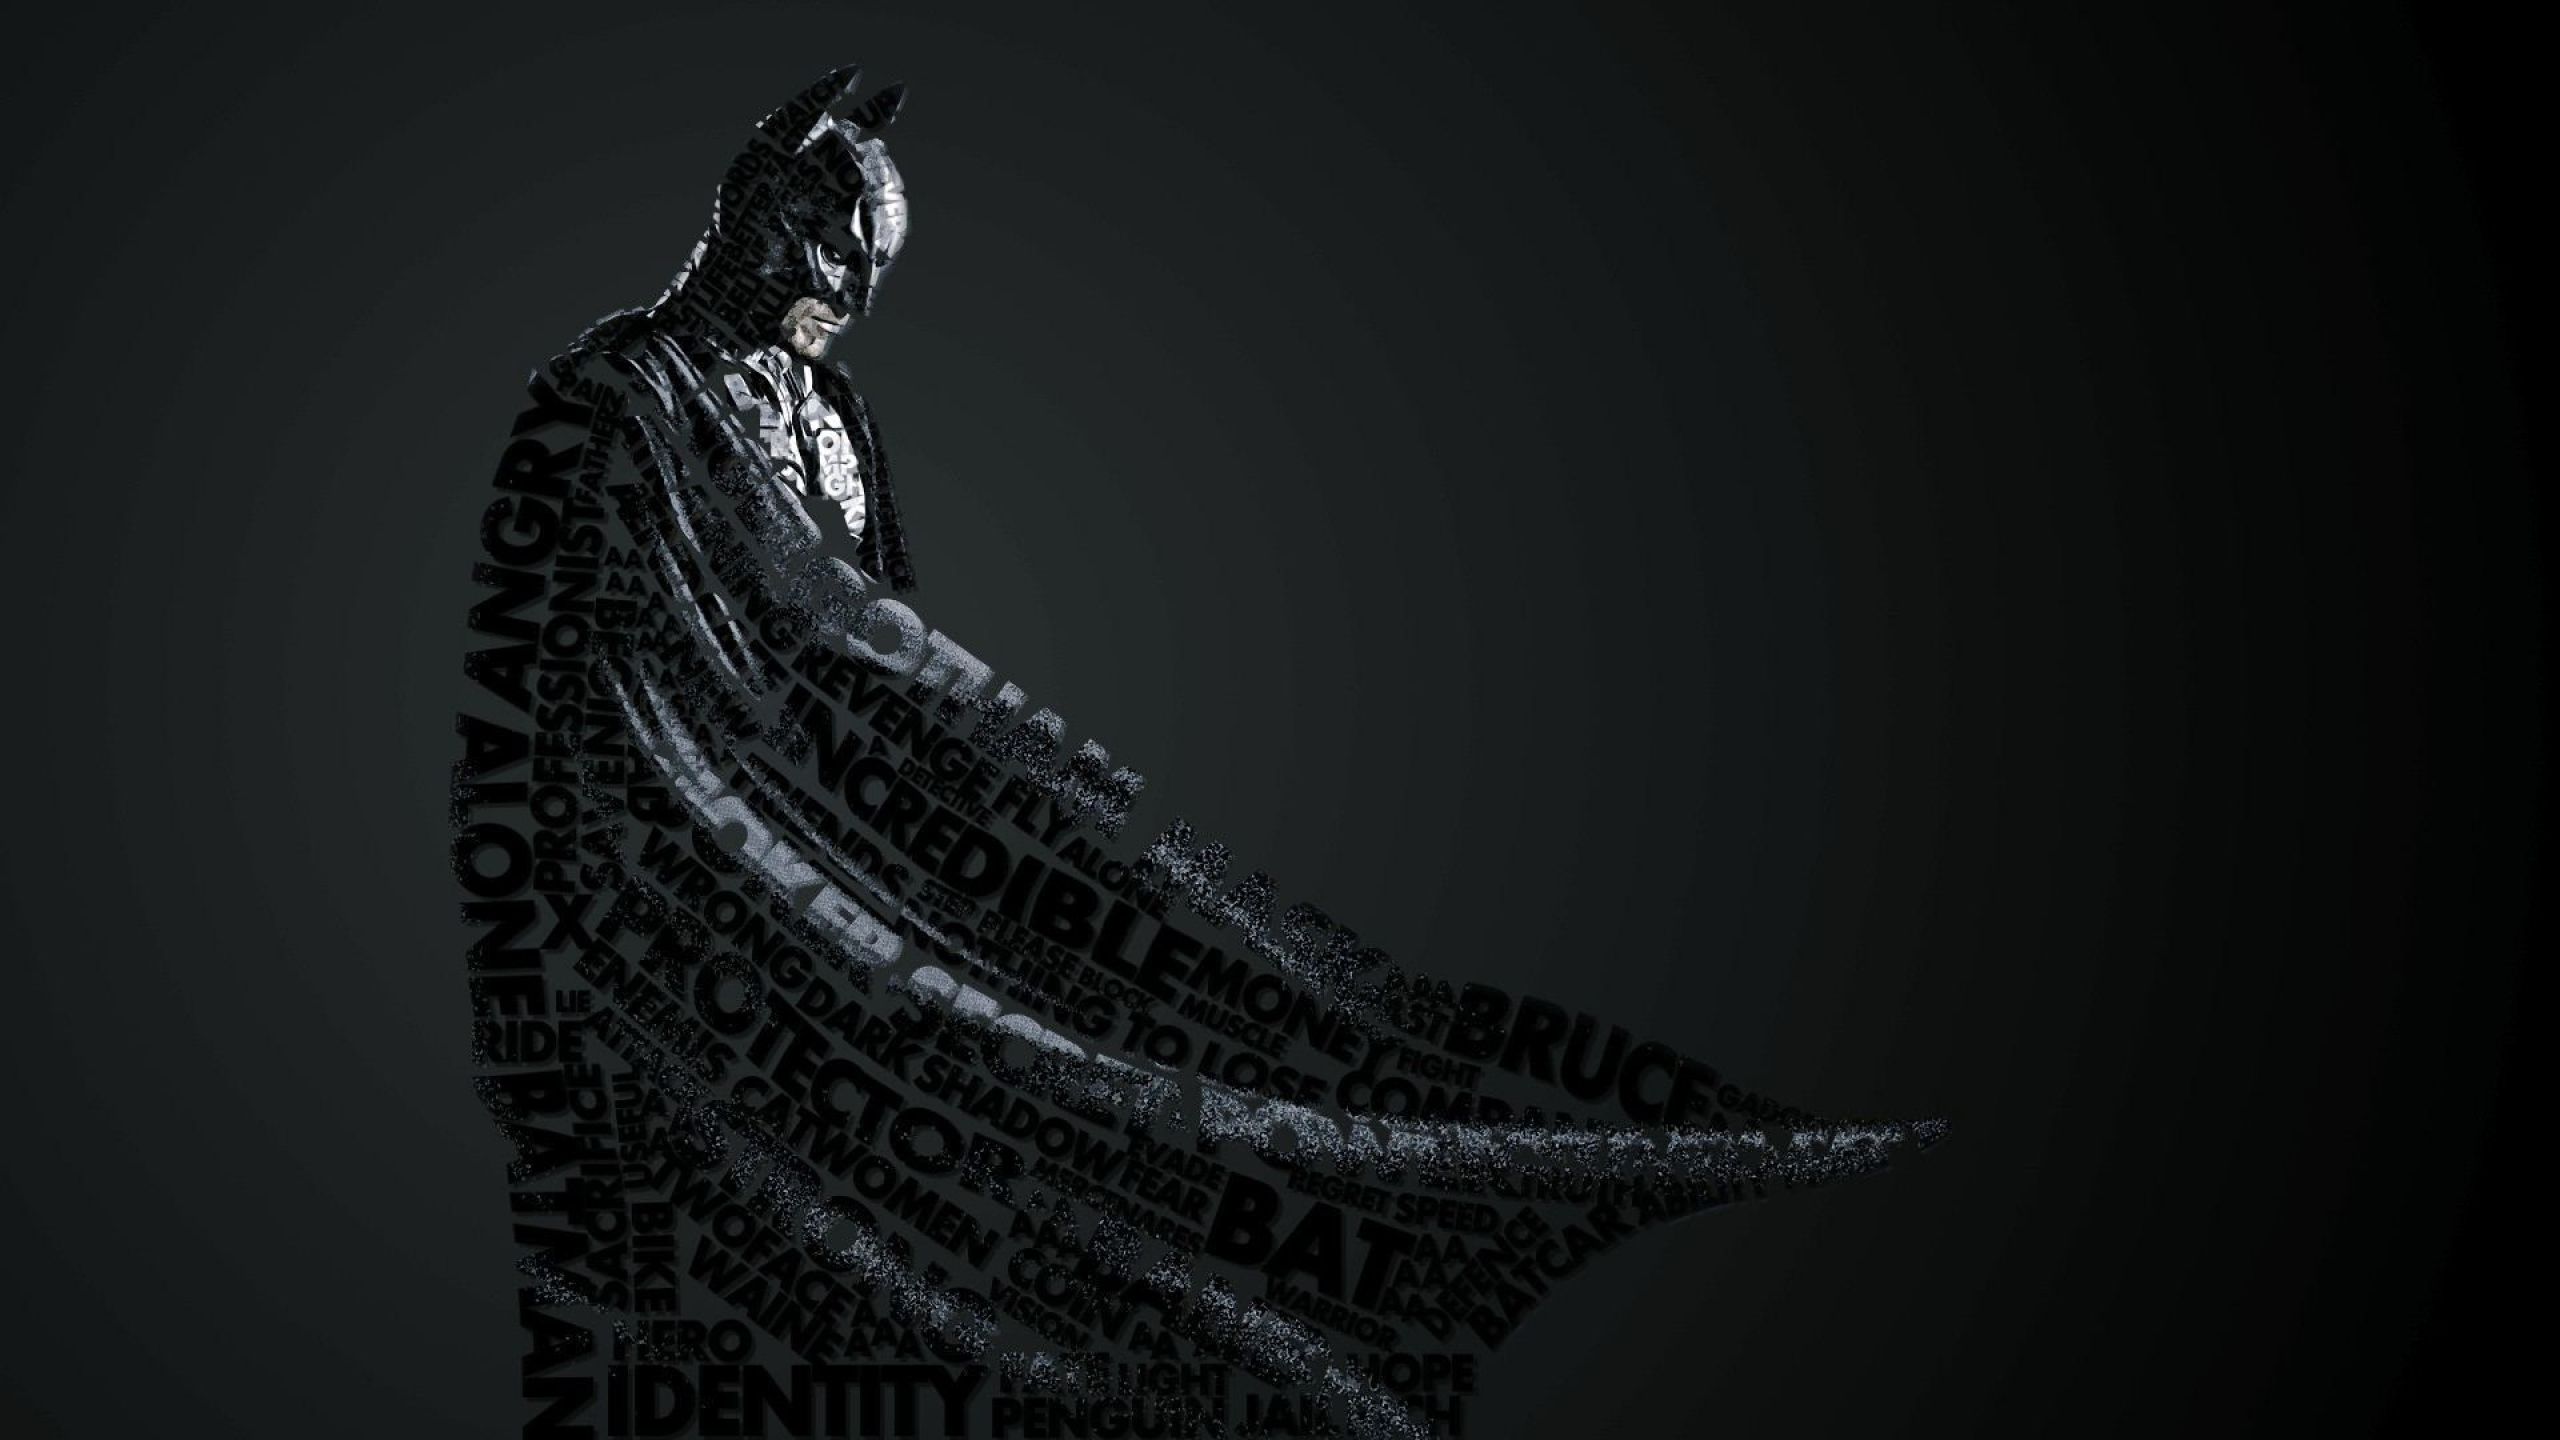 Batman Typography - 2560x1440 Wallpaper 